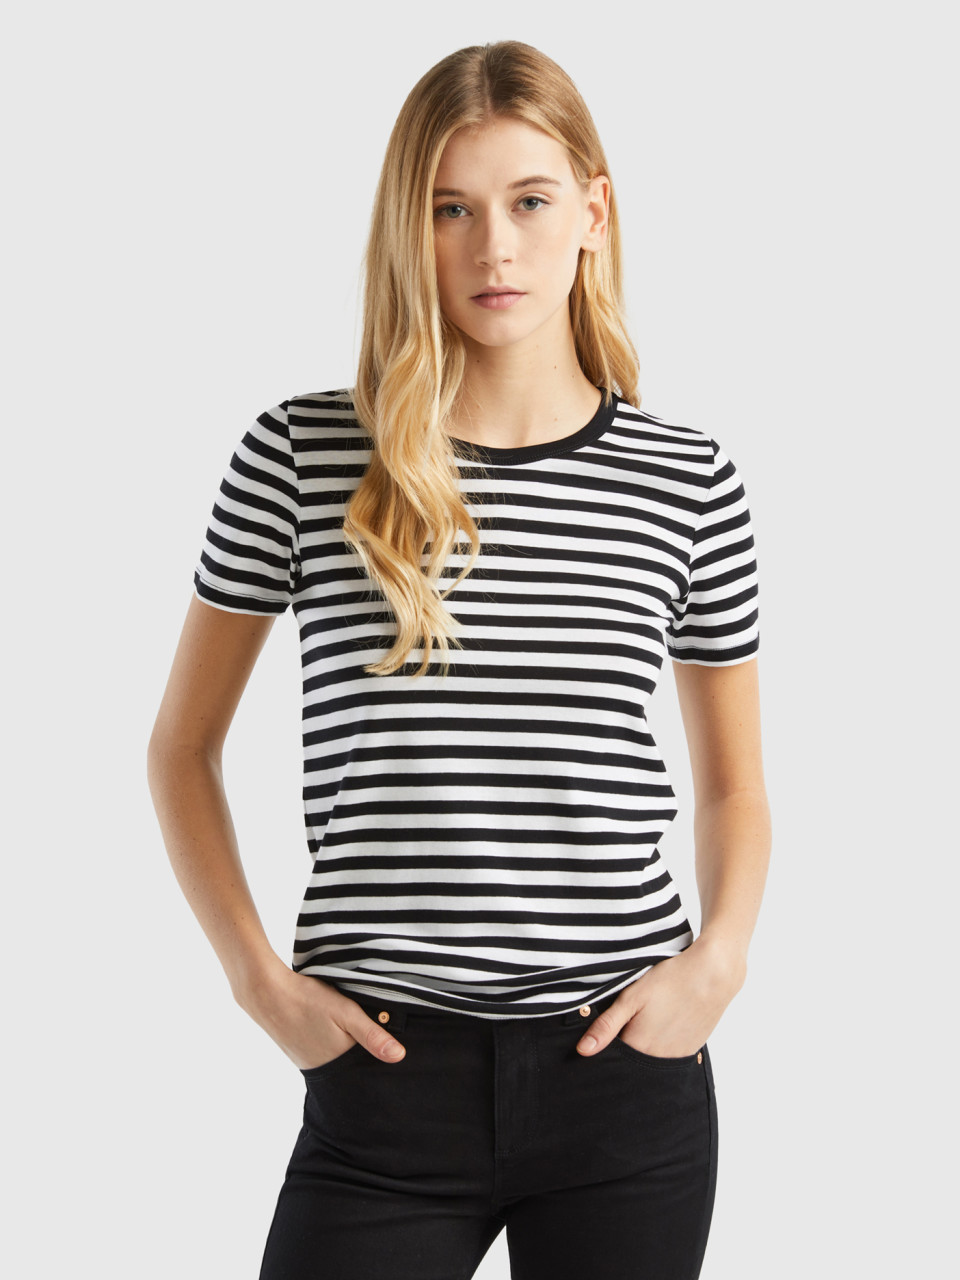 Benetton Online exclusive, Crew Neck Striped T-shirt, Black, Women